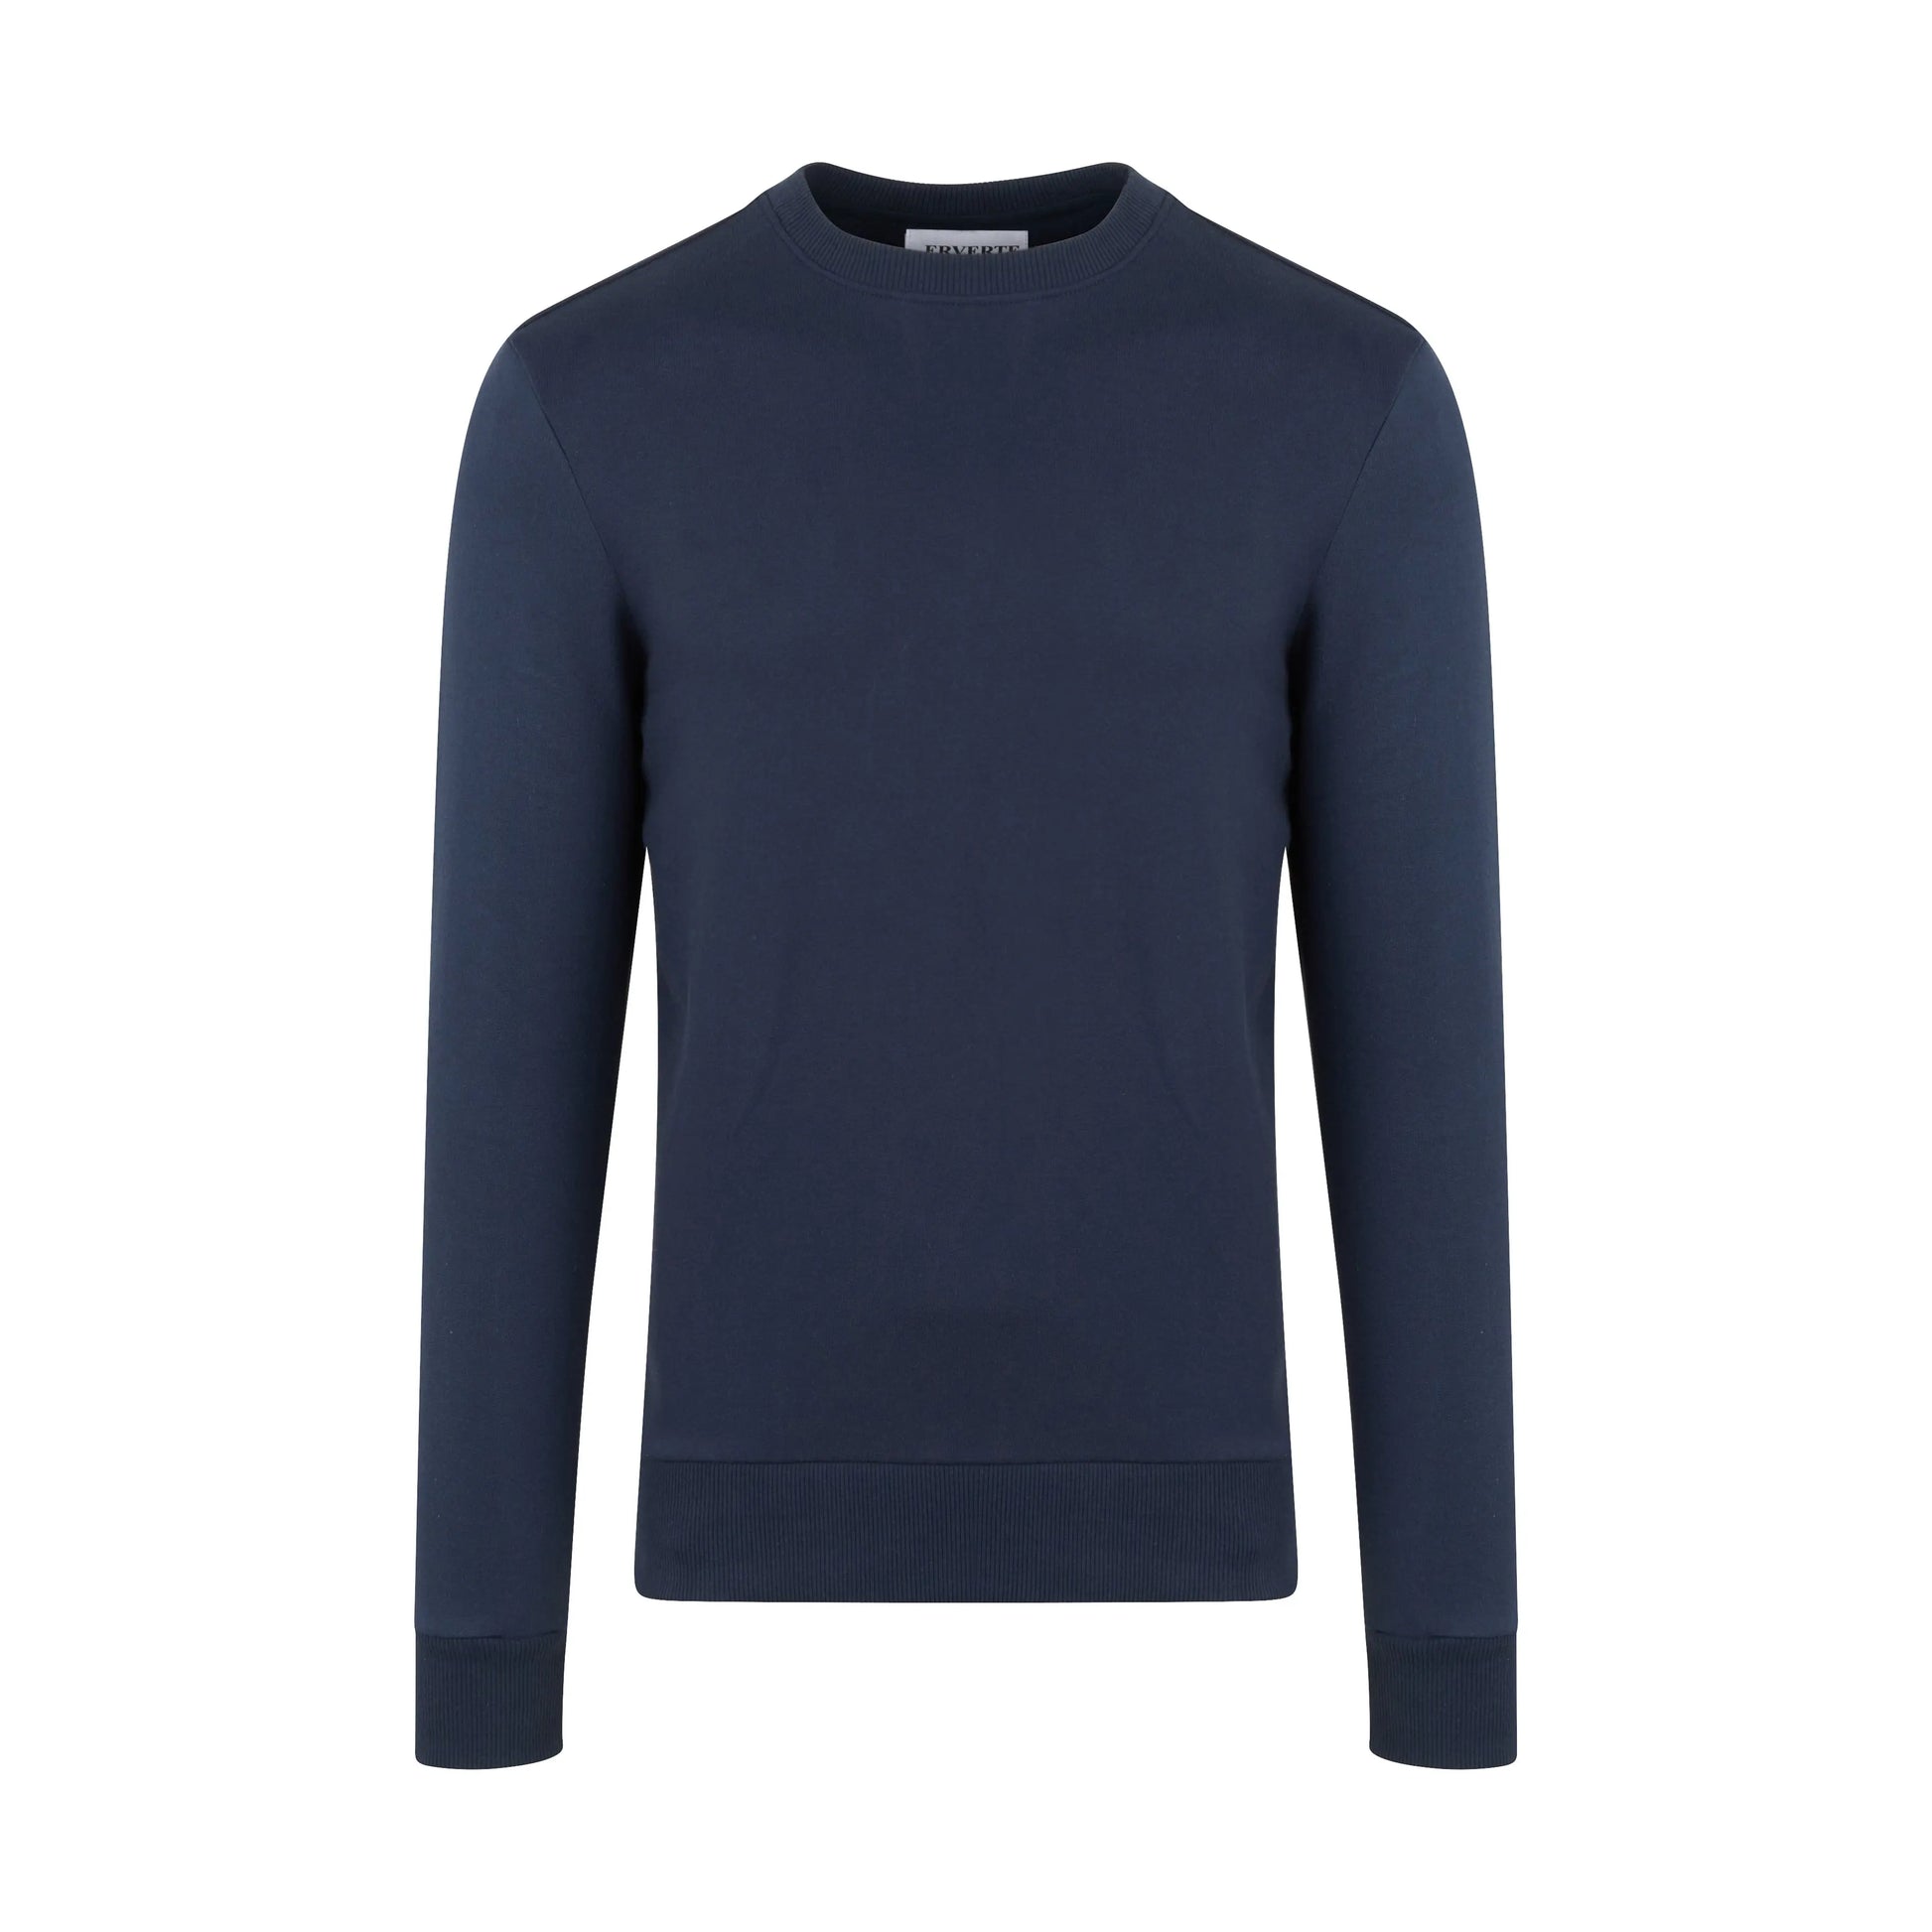 Navy Blue Causal Sweatshirt | Navy Blue Sweatshirt | Erverte Paris